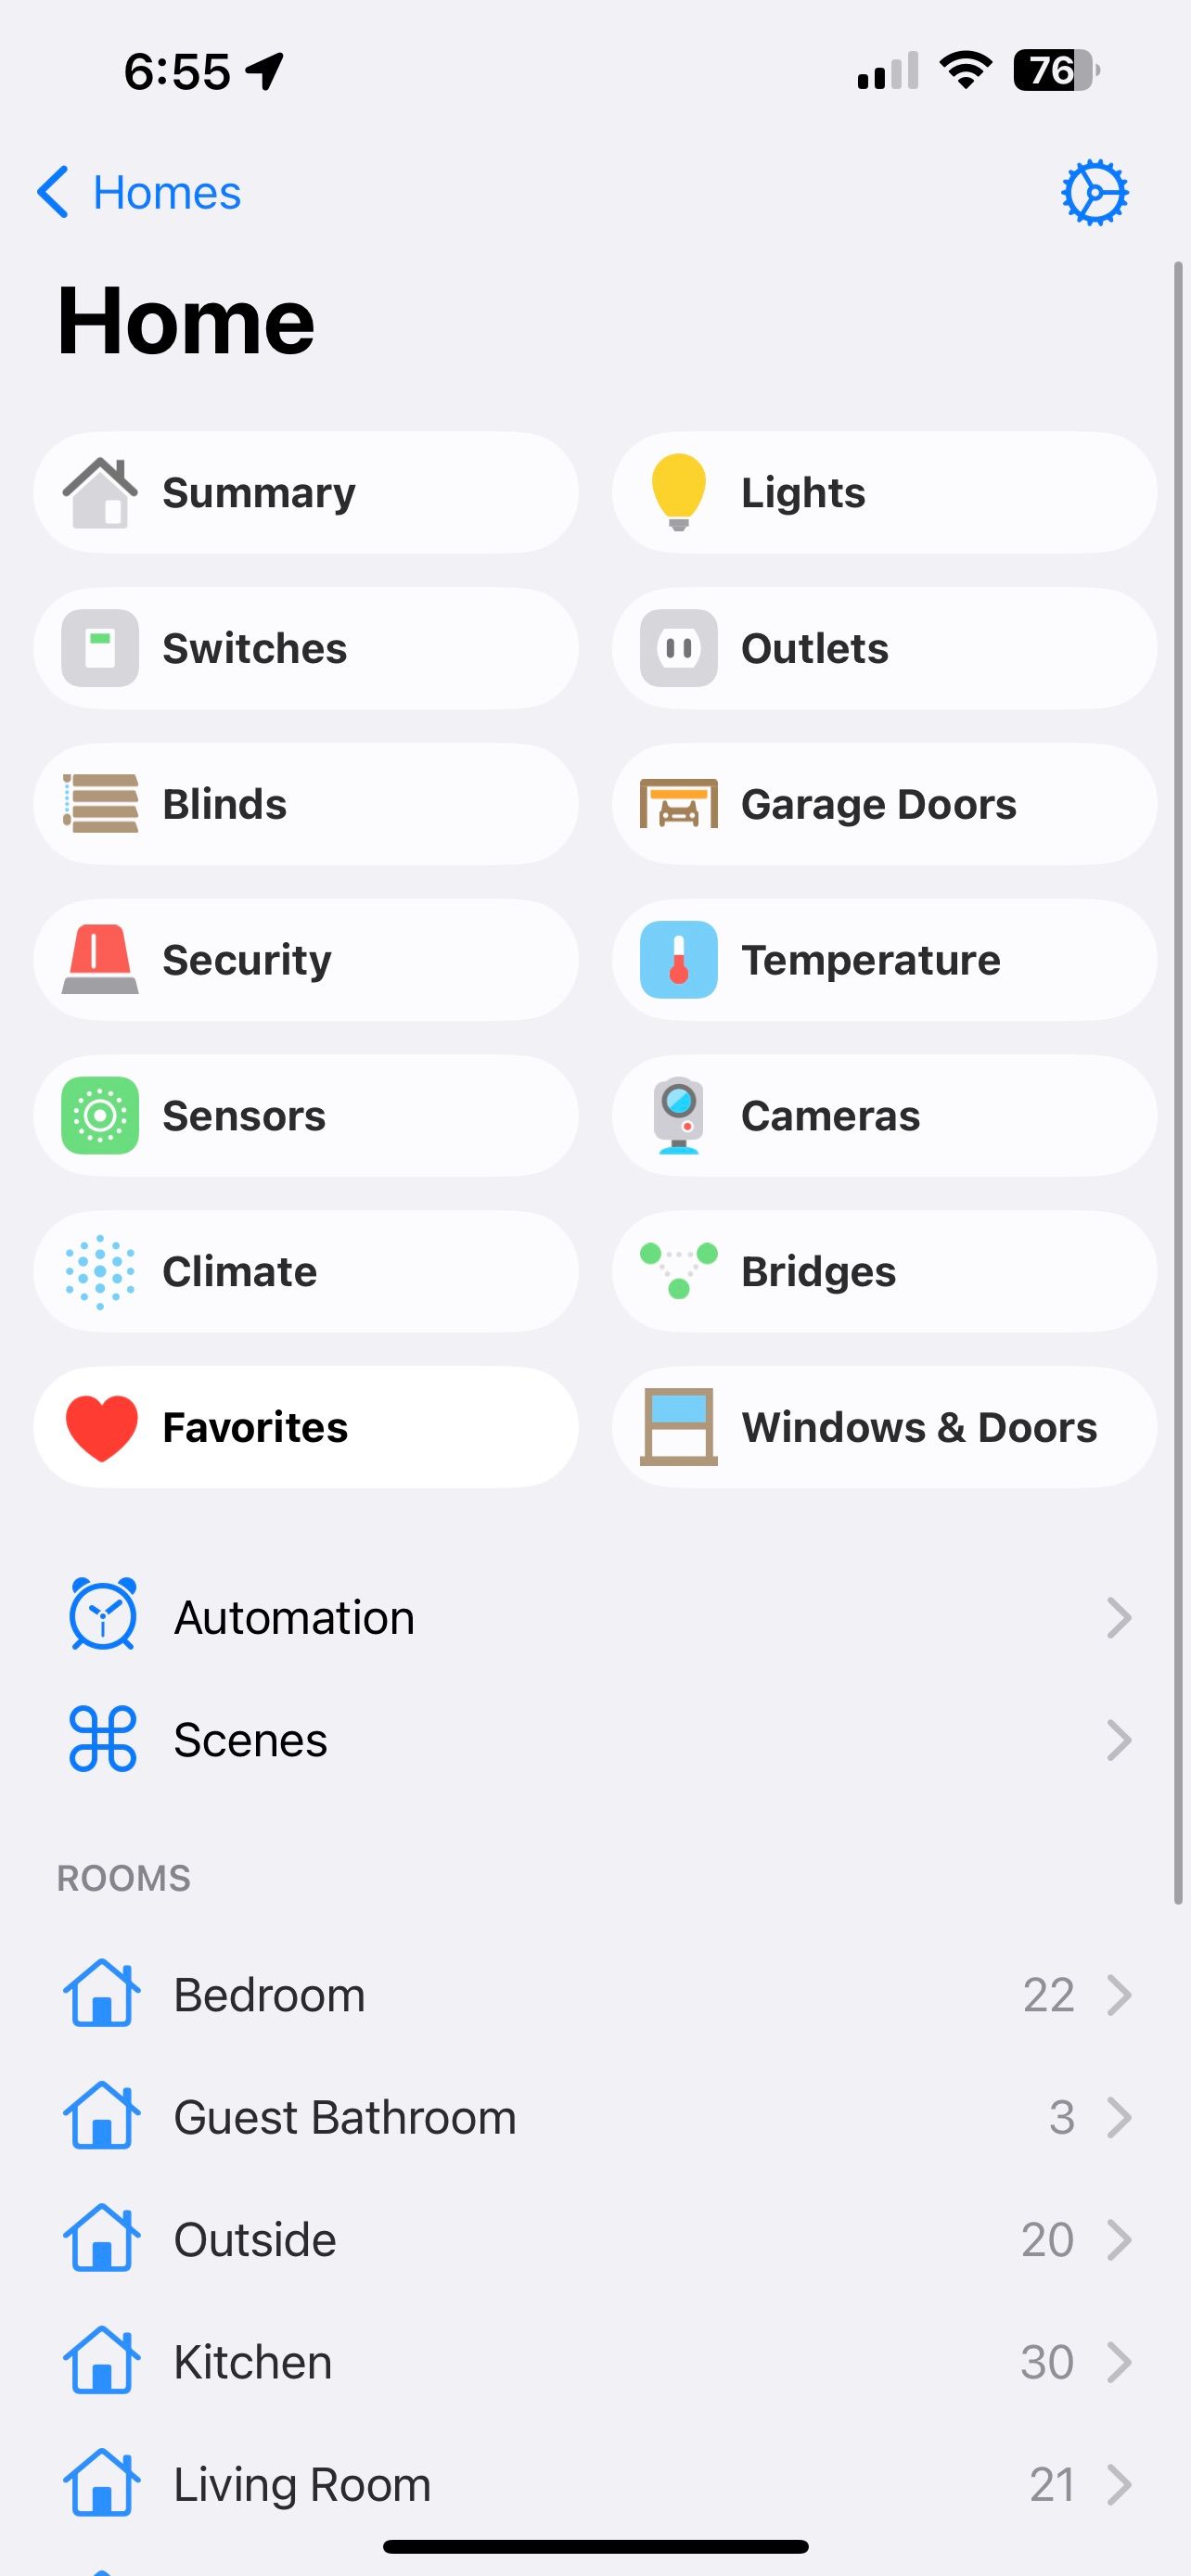 Home+6 iOS App Home Screen